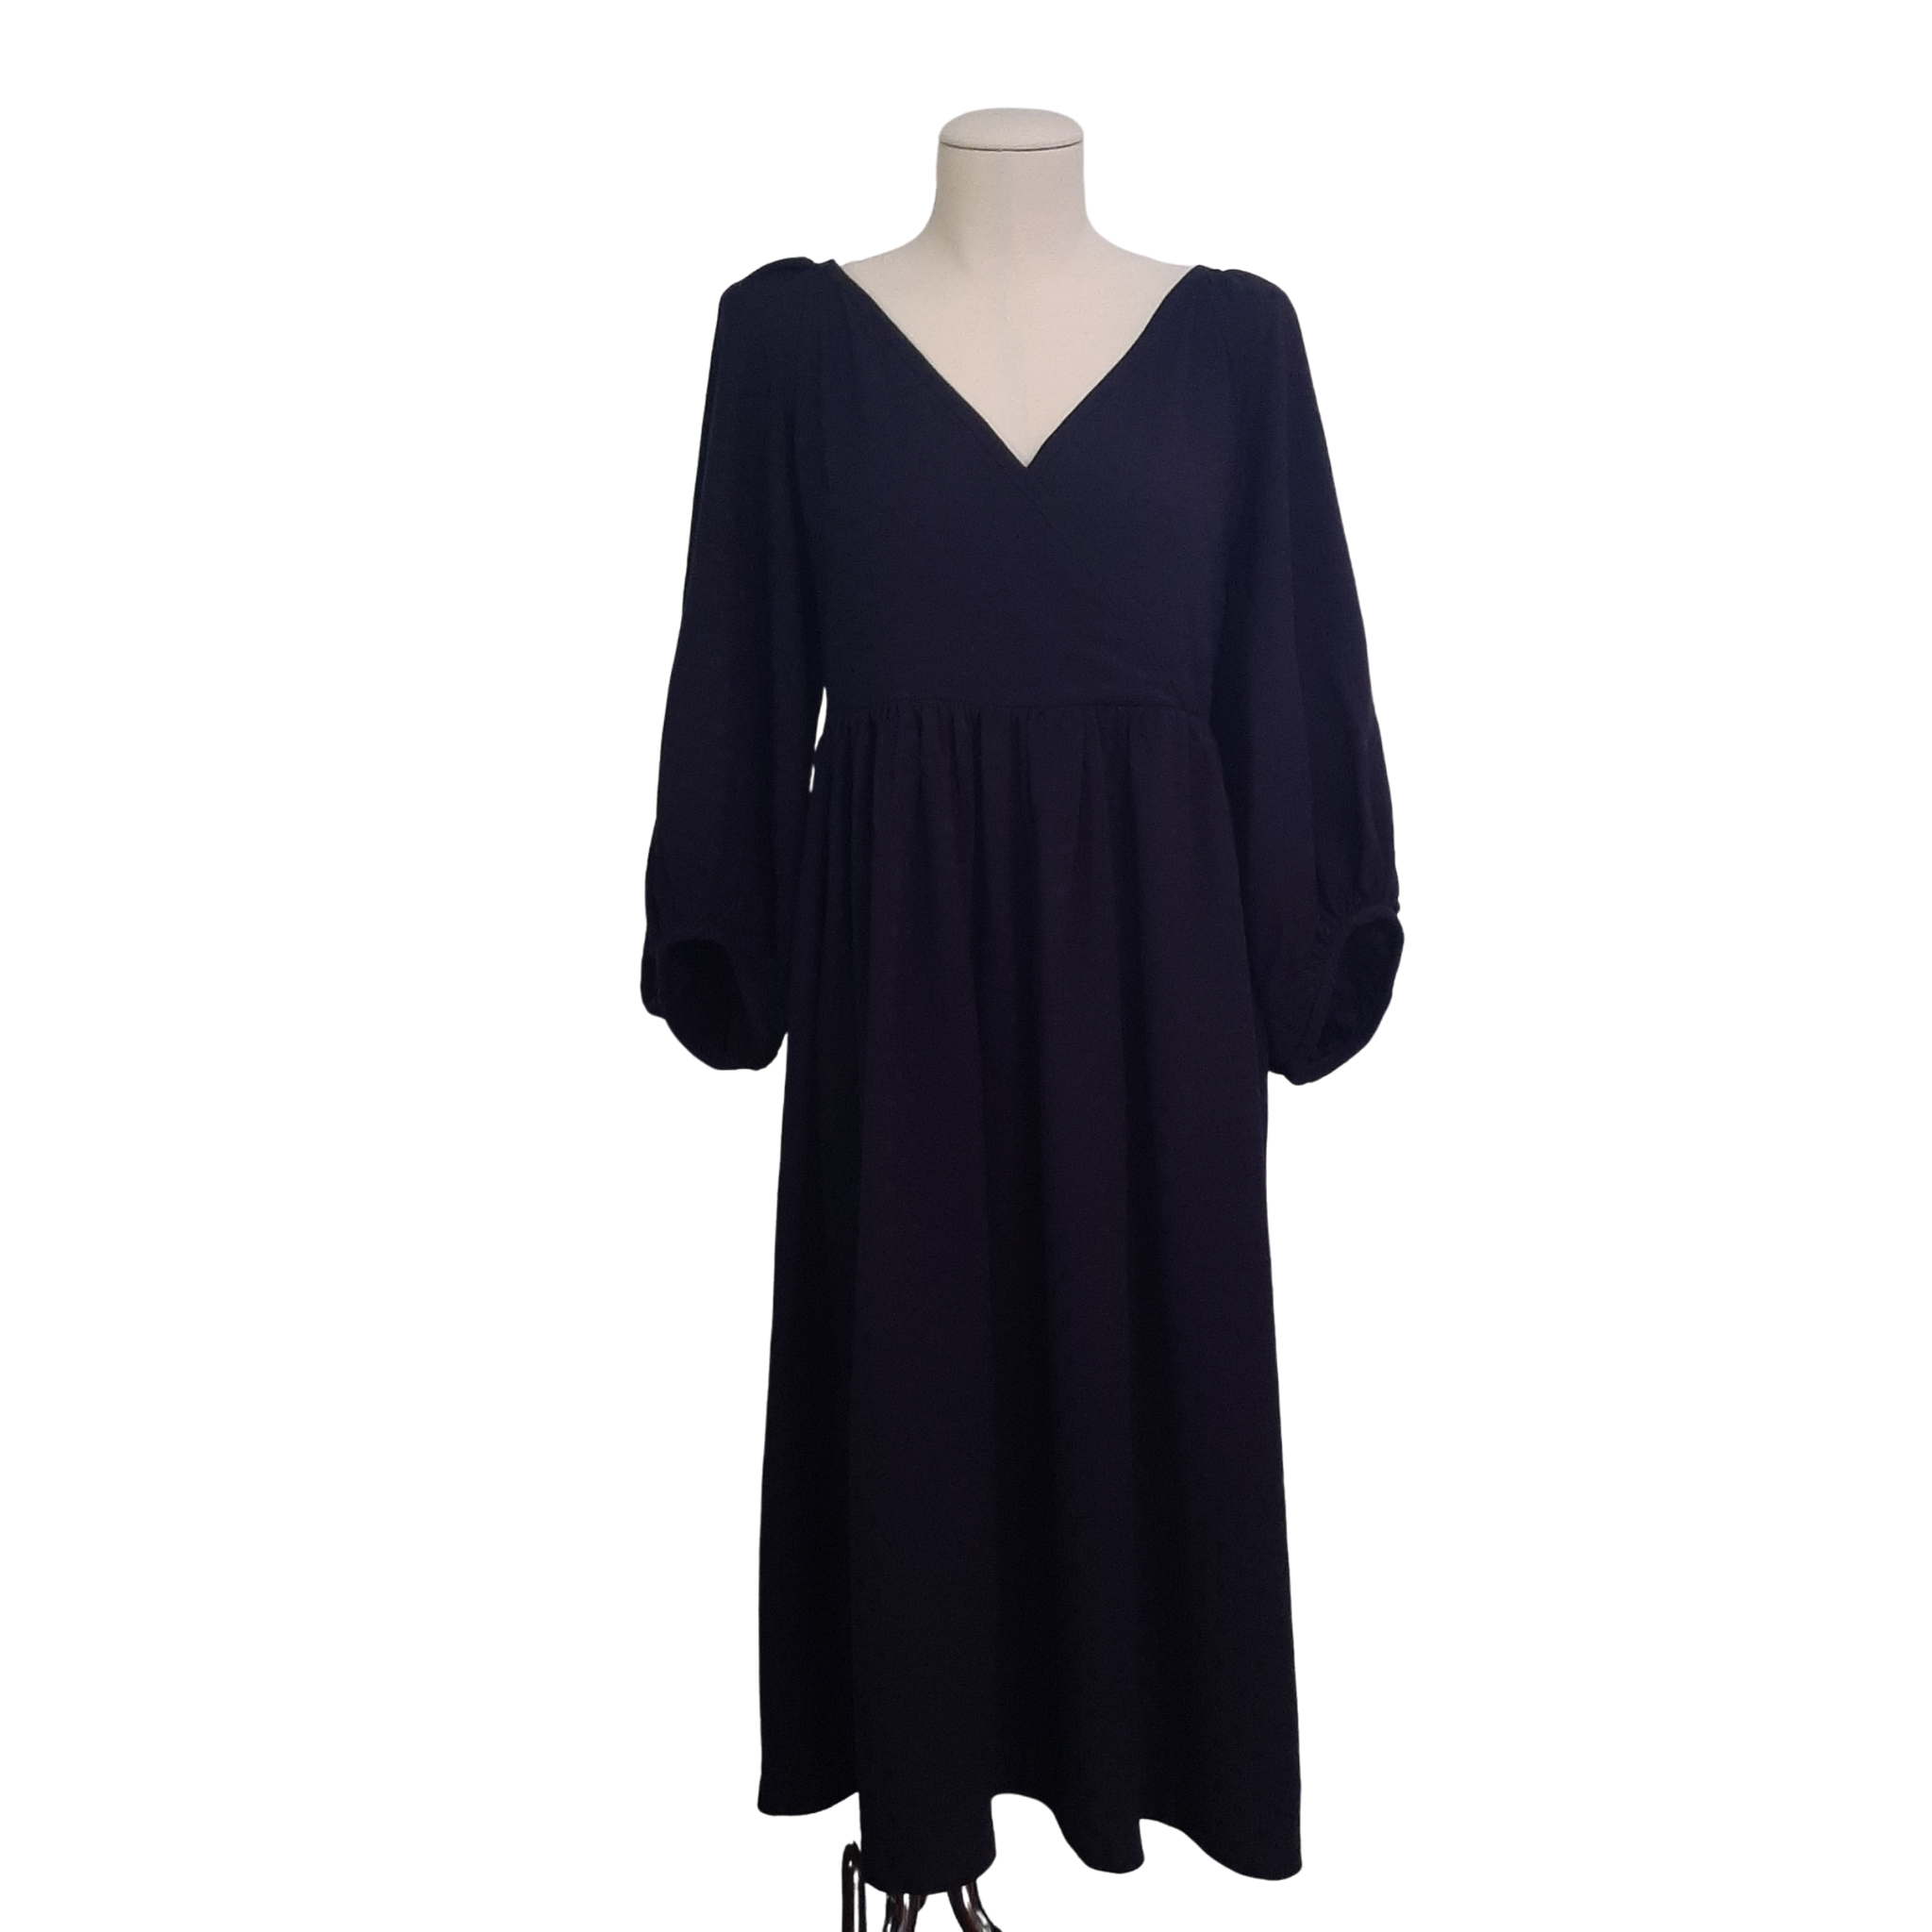 FrocKit 72A - McCalls 7969 Dress View A - Black Linen/Cotton Blend, So ...